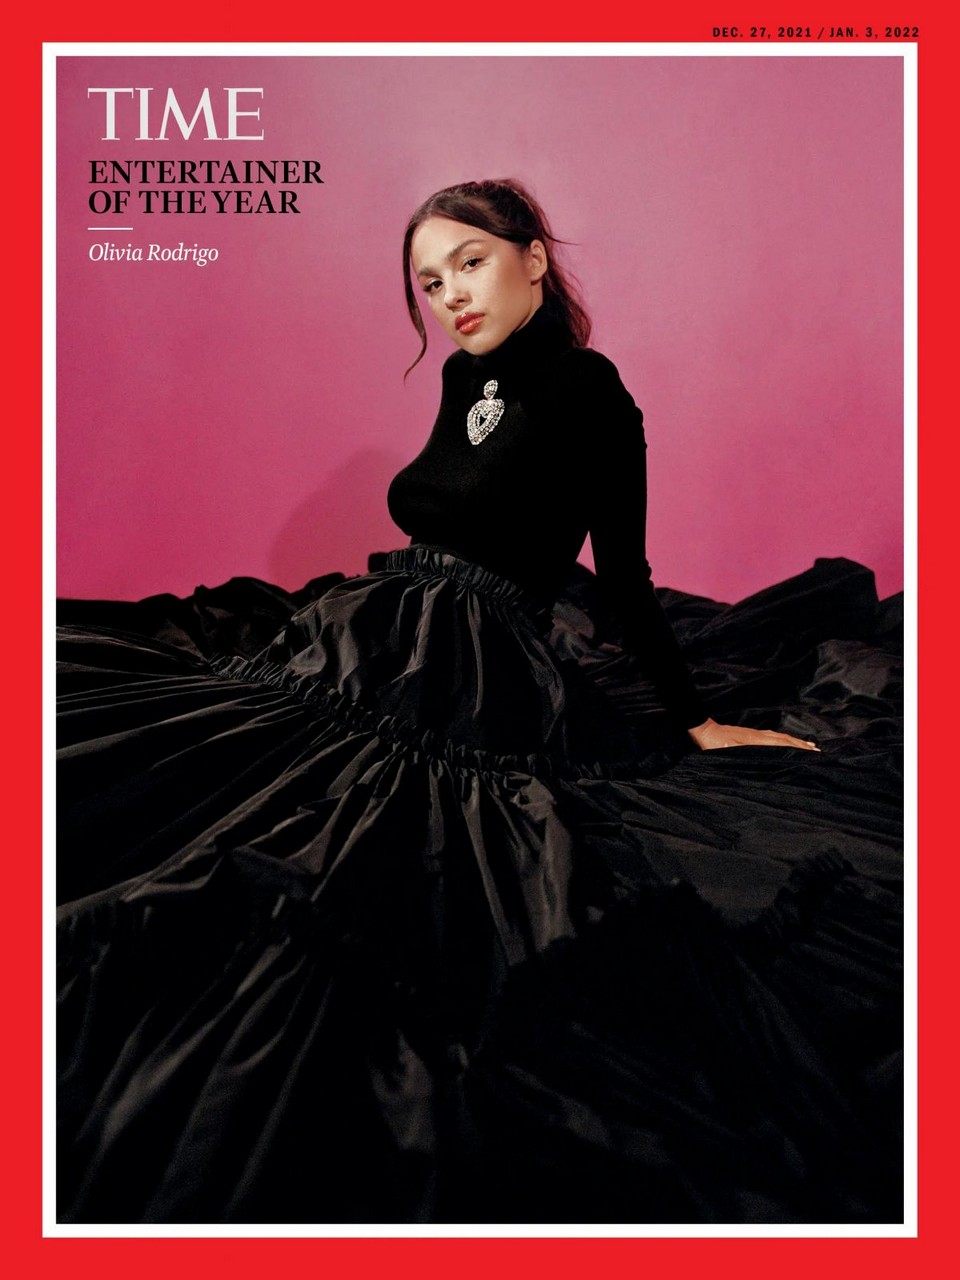 Olivia Rodrigo For Time Magazine Entertainer Year December 2021 January